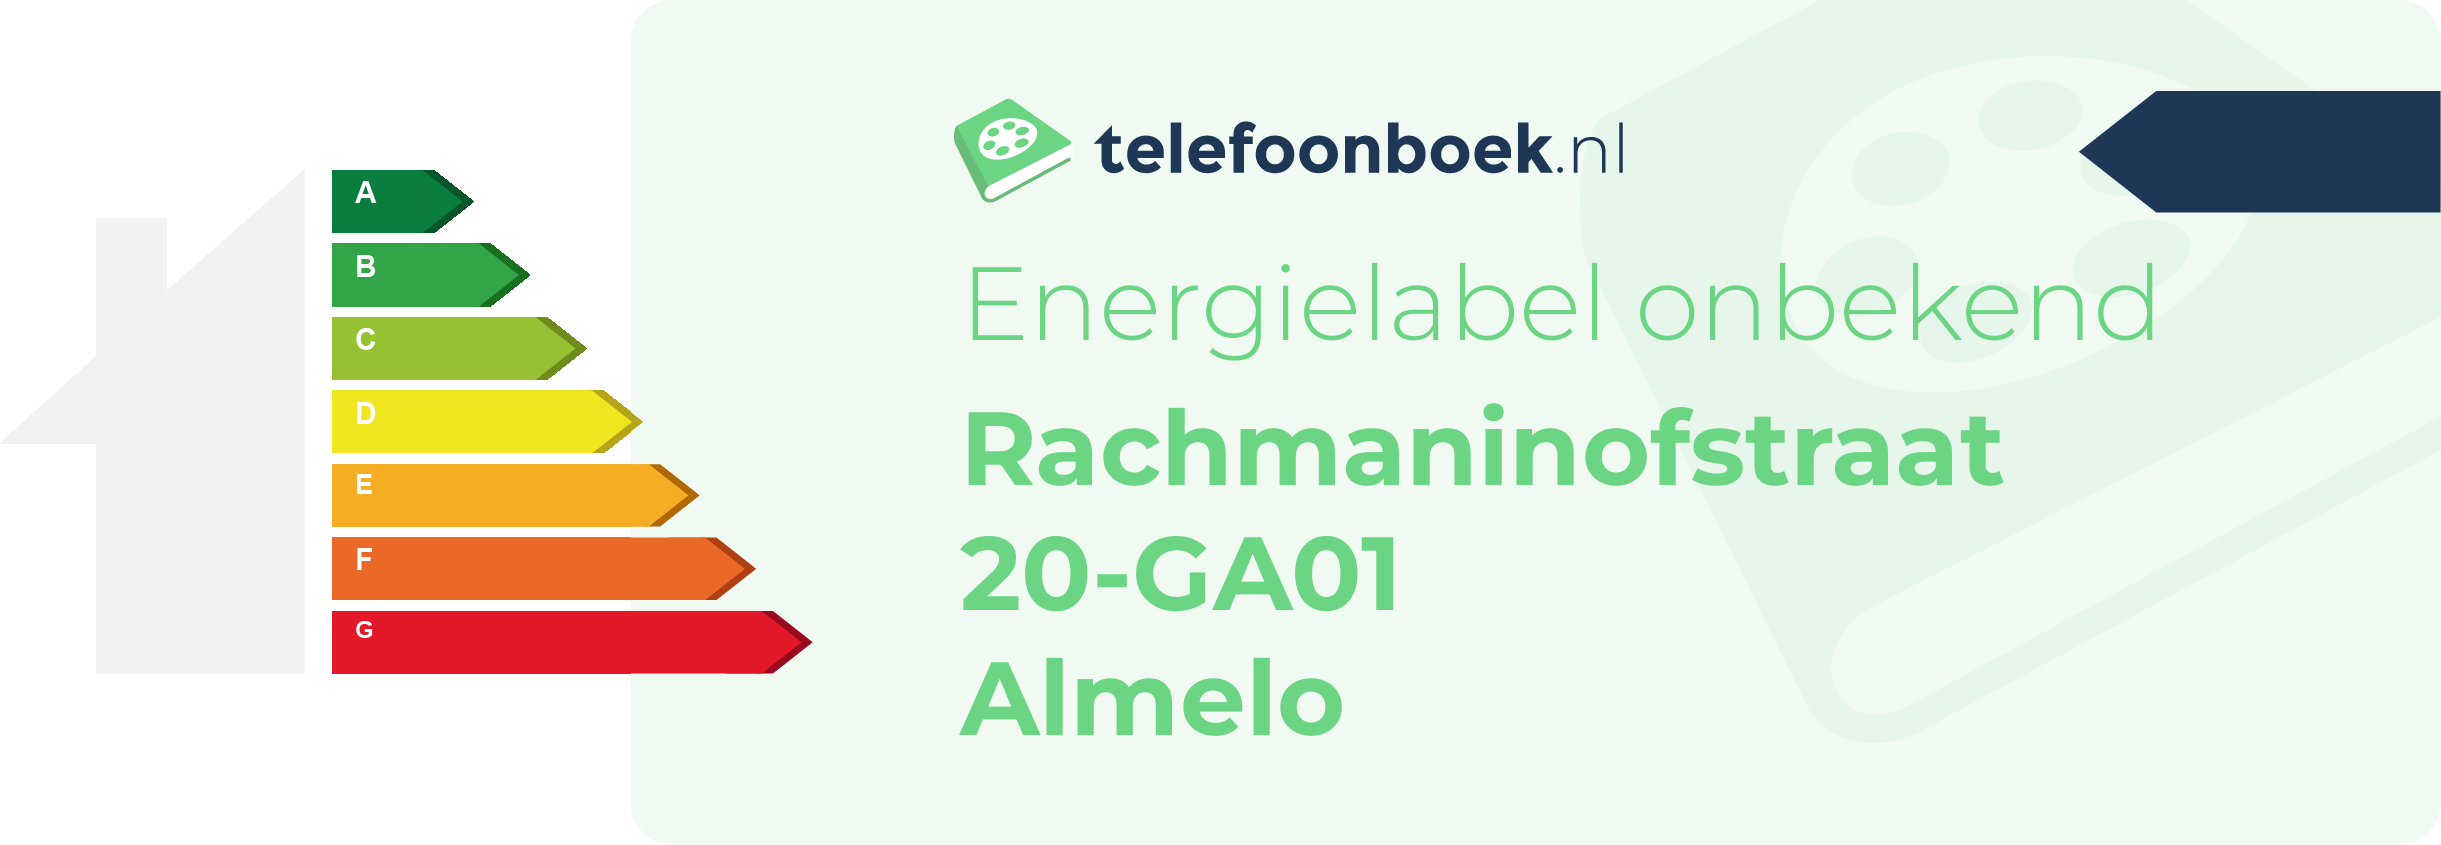 Energielabel Rachmaninofstraat 20-GA01 Almelo